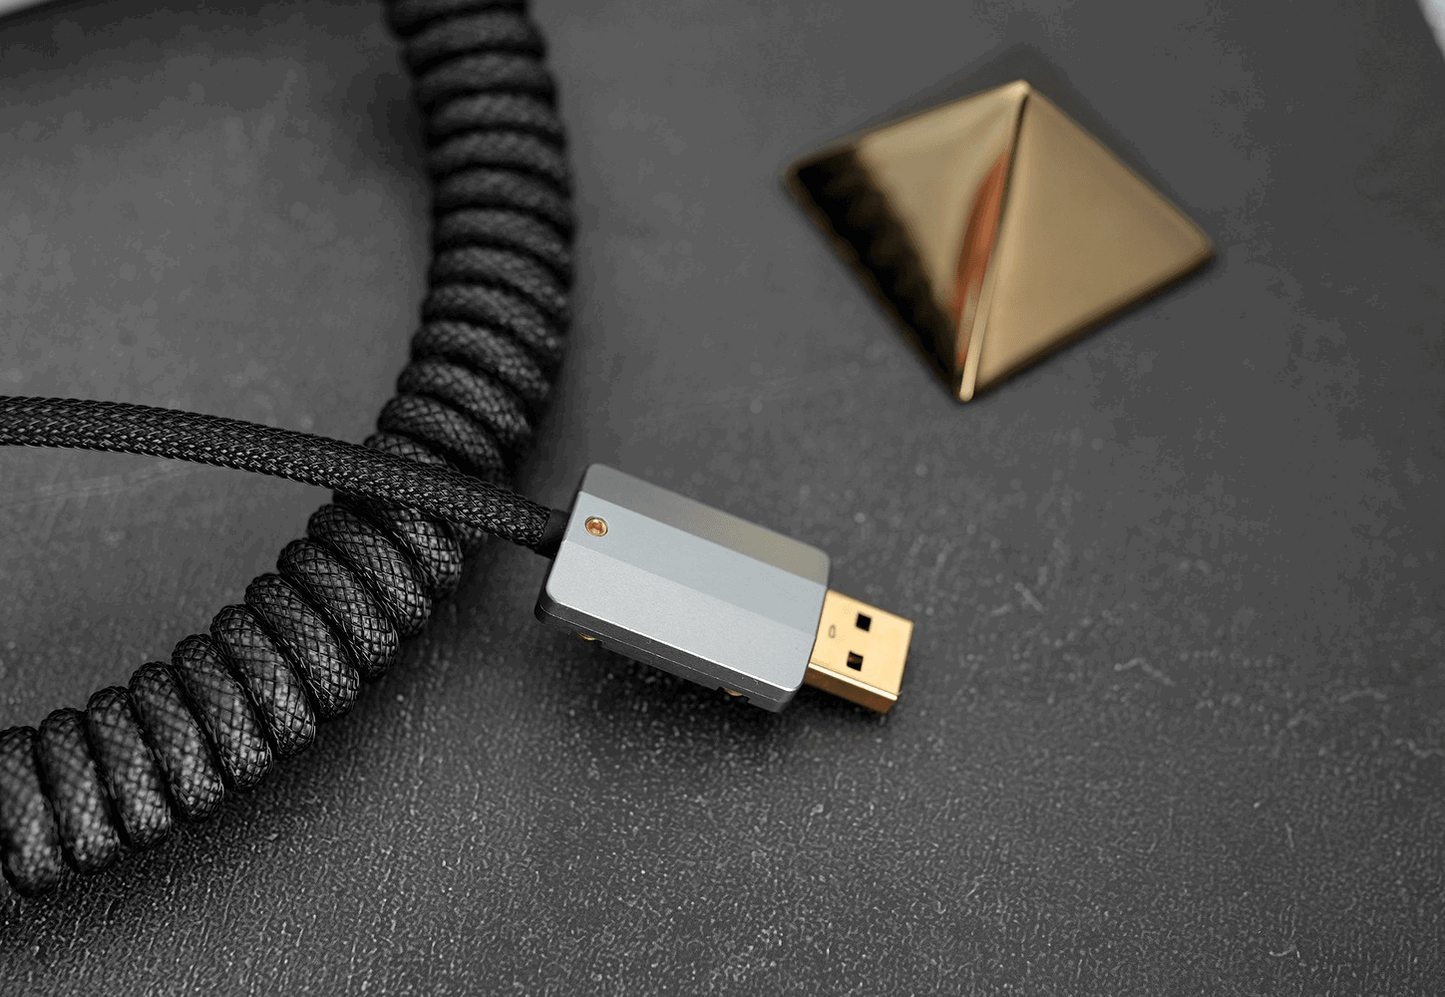 GeekCable Full Black Type-C Mini-USB Micro PH/XH Manual Customized Cable - IPOPULARSHOP